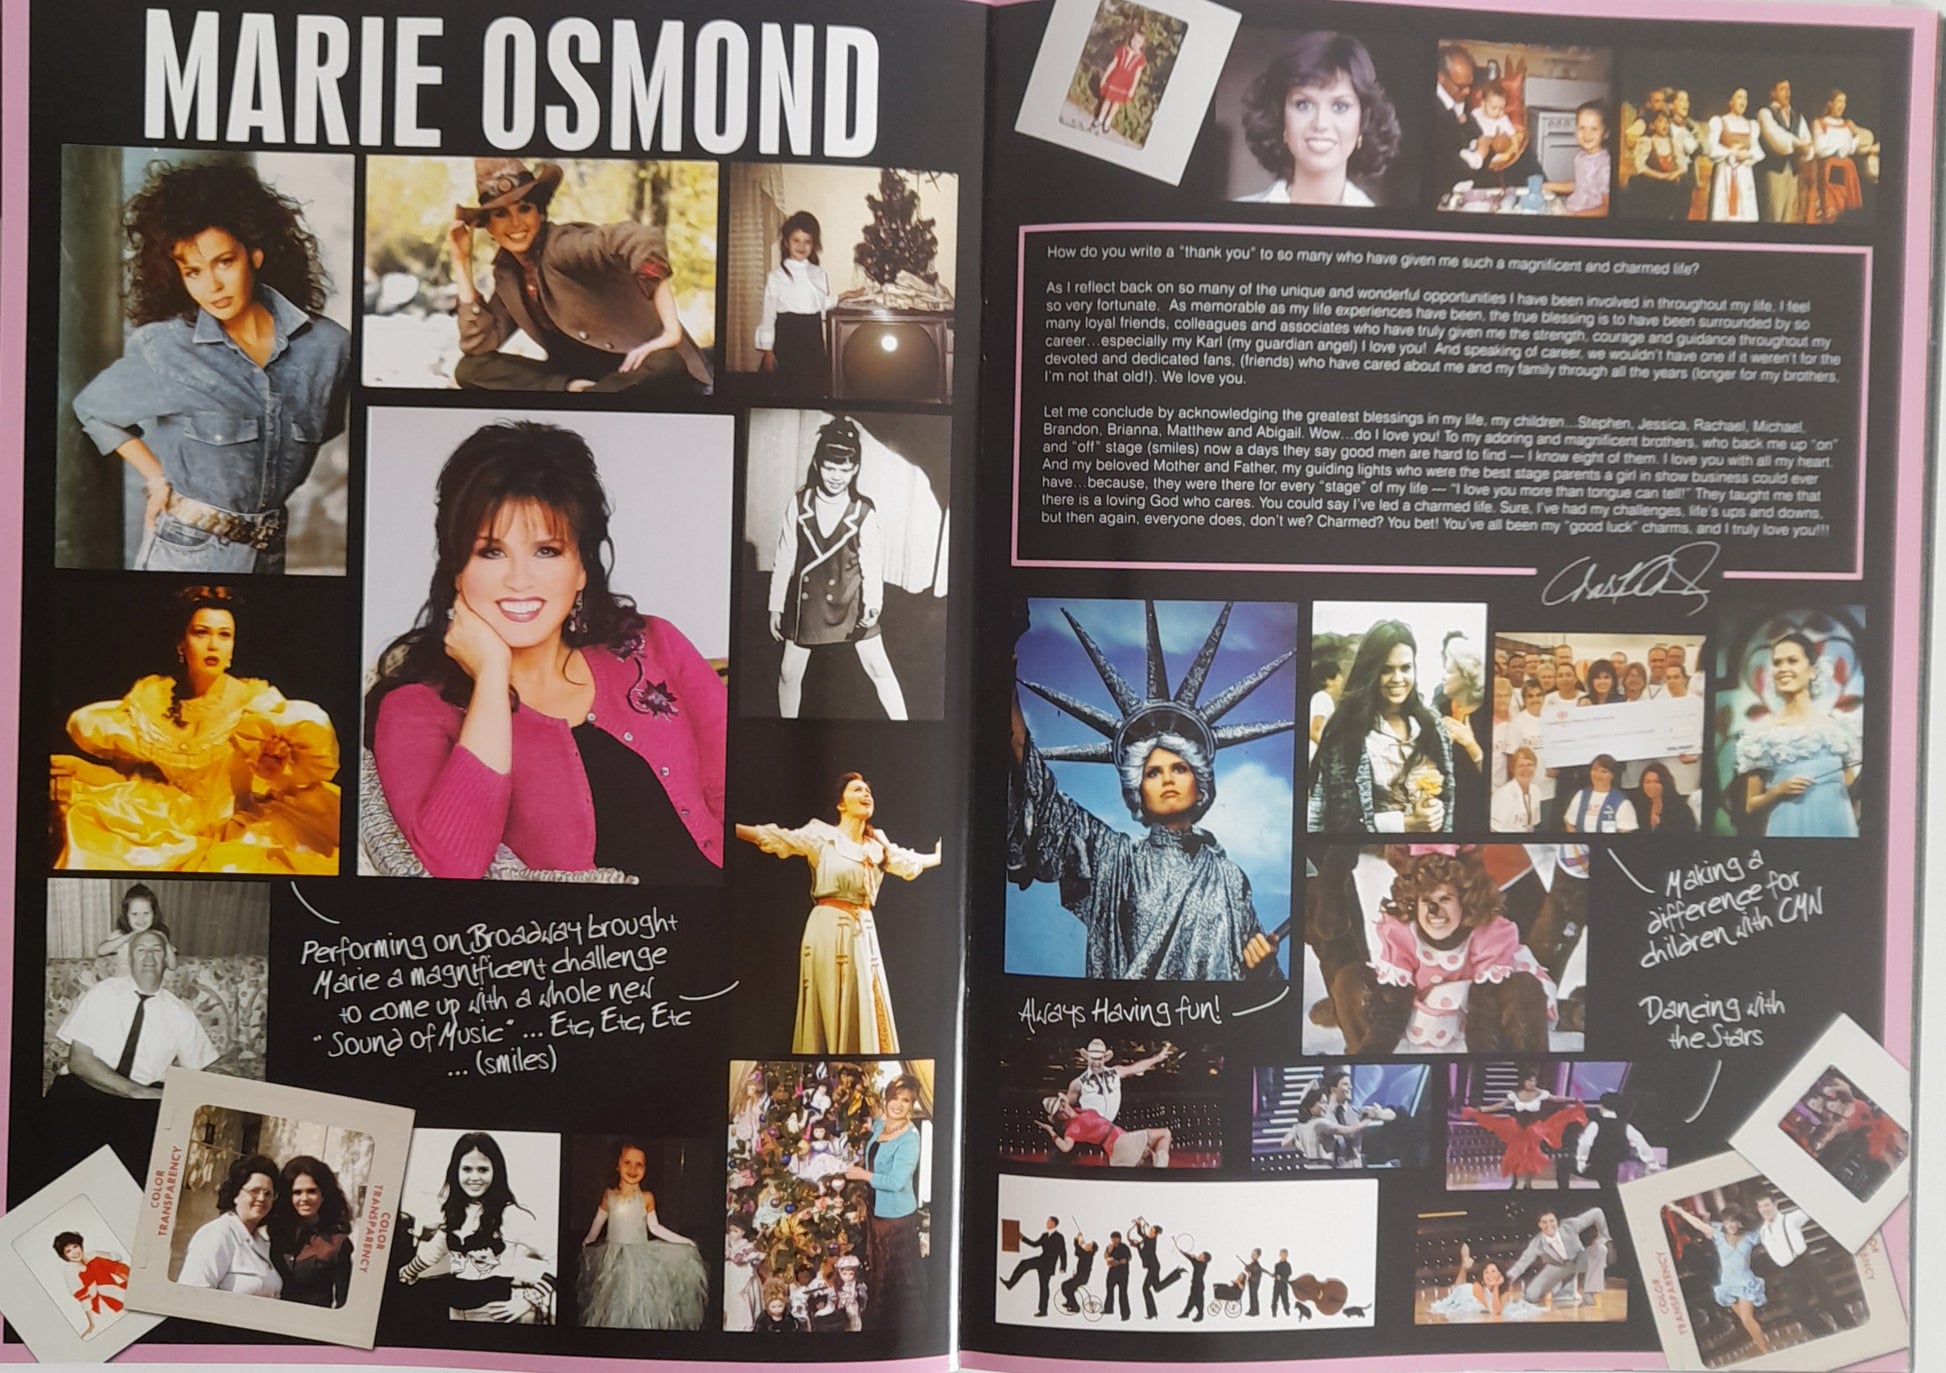 The Osmonds 50th Anniversary Tour Programme